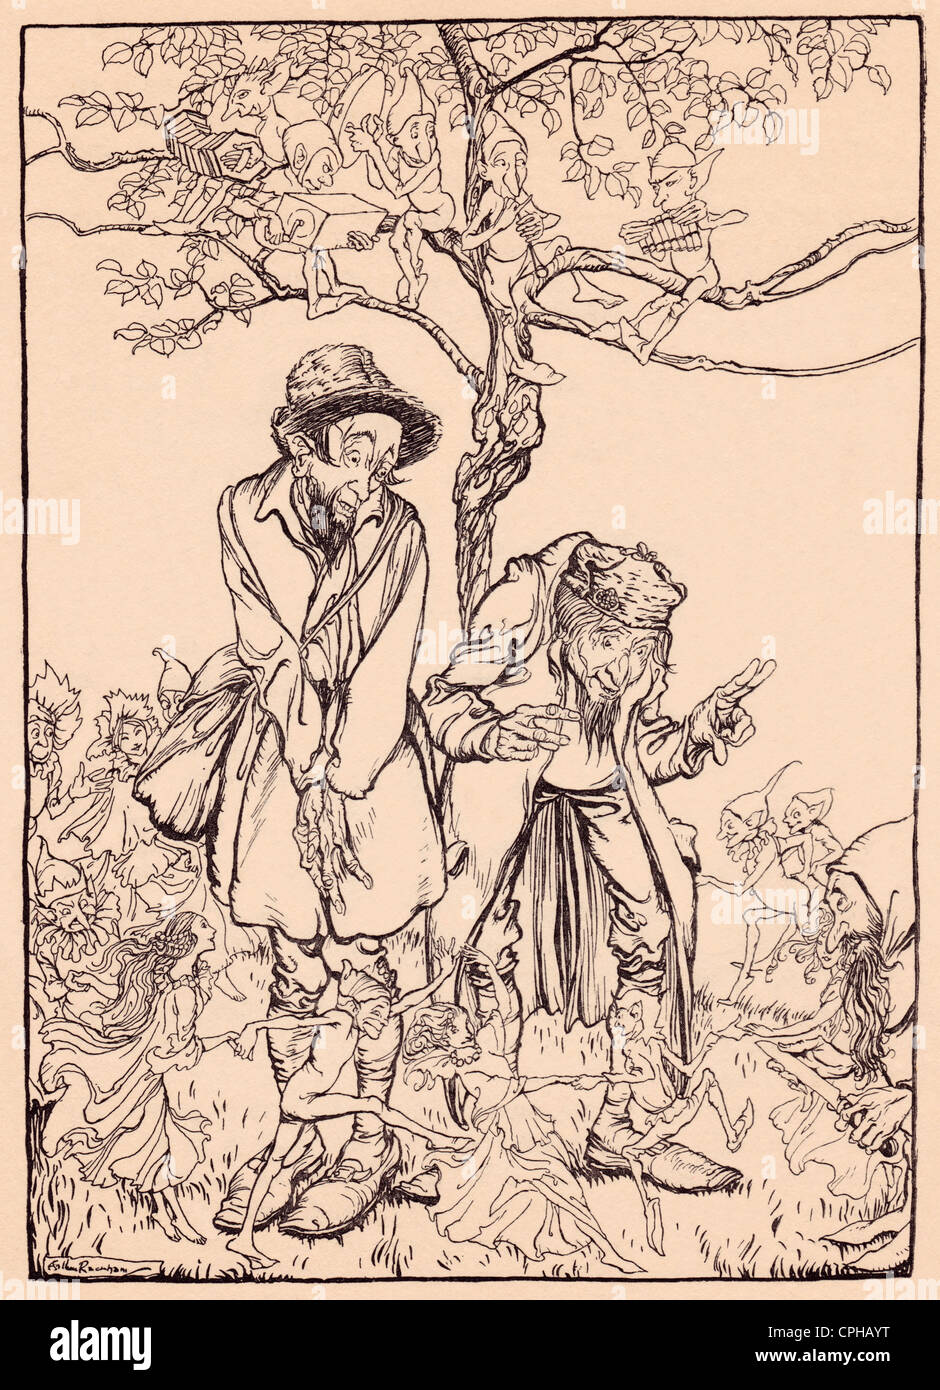 Illustration by Arthur Rackham from Grimm's Fairy Tale, The Little Folk's Presents. Stock Photo